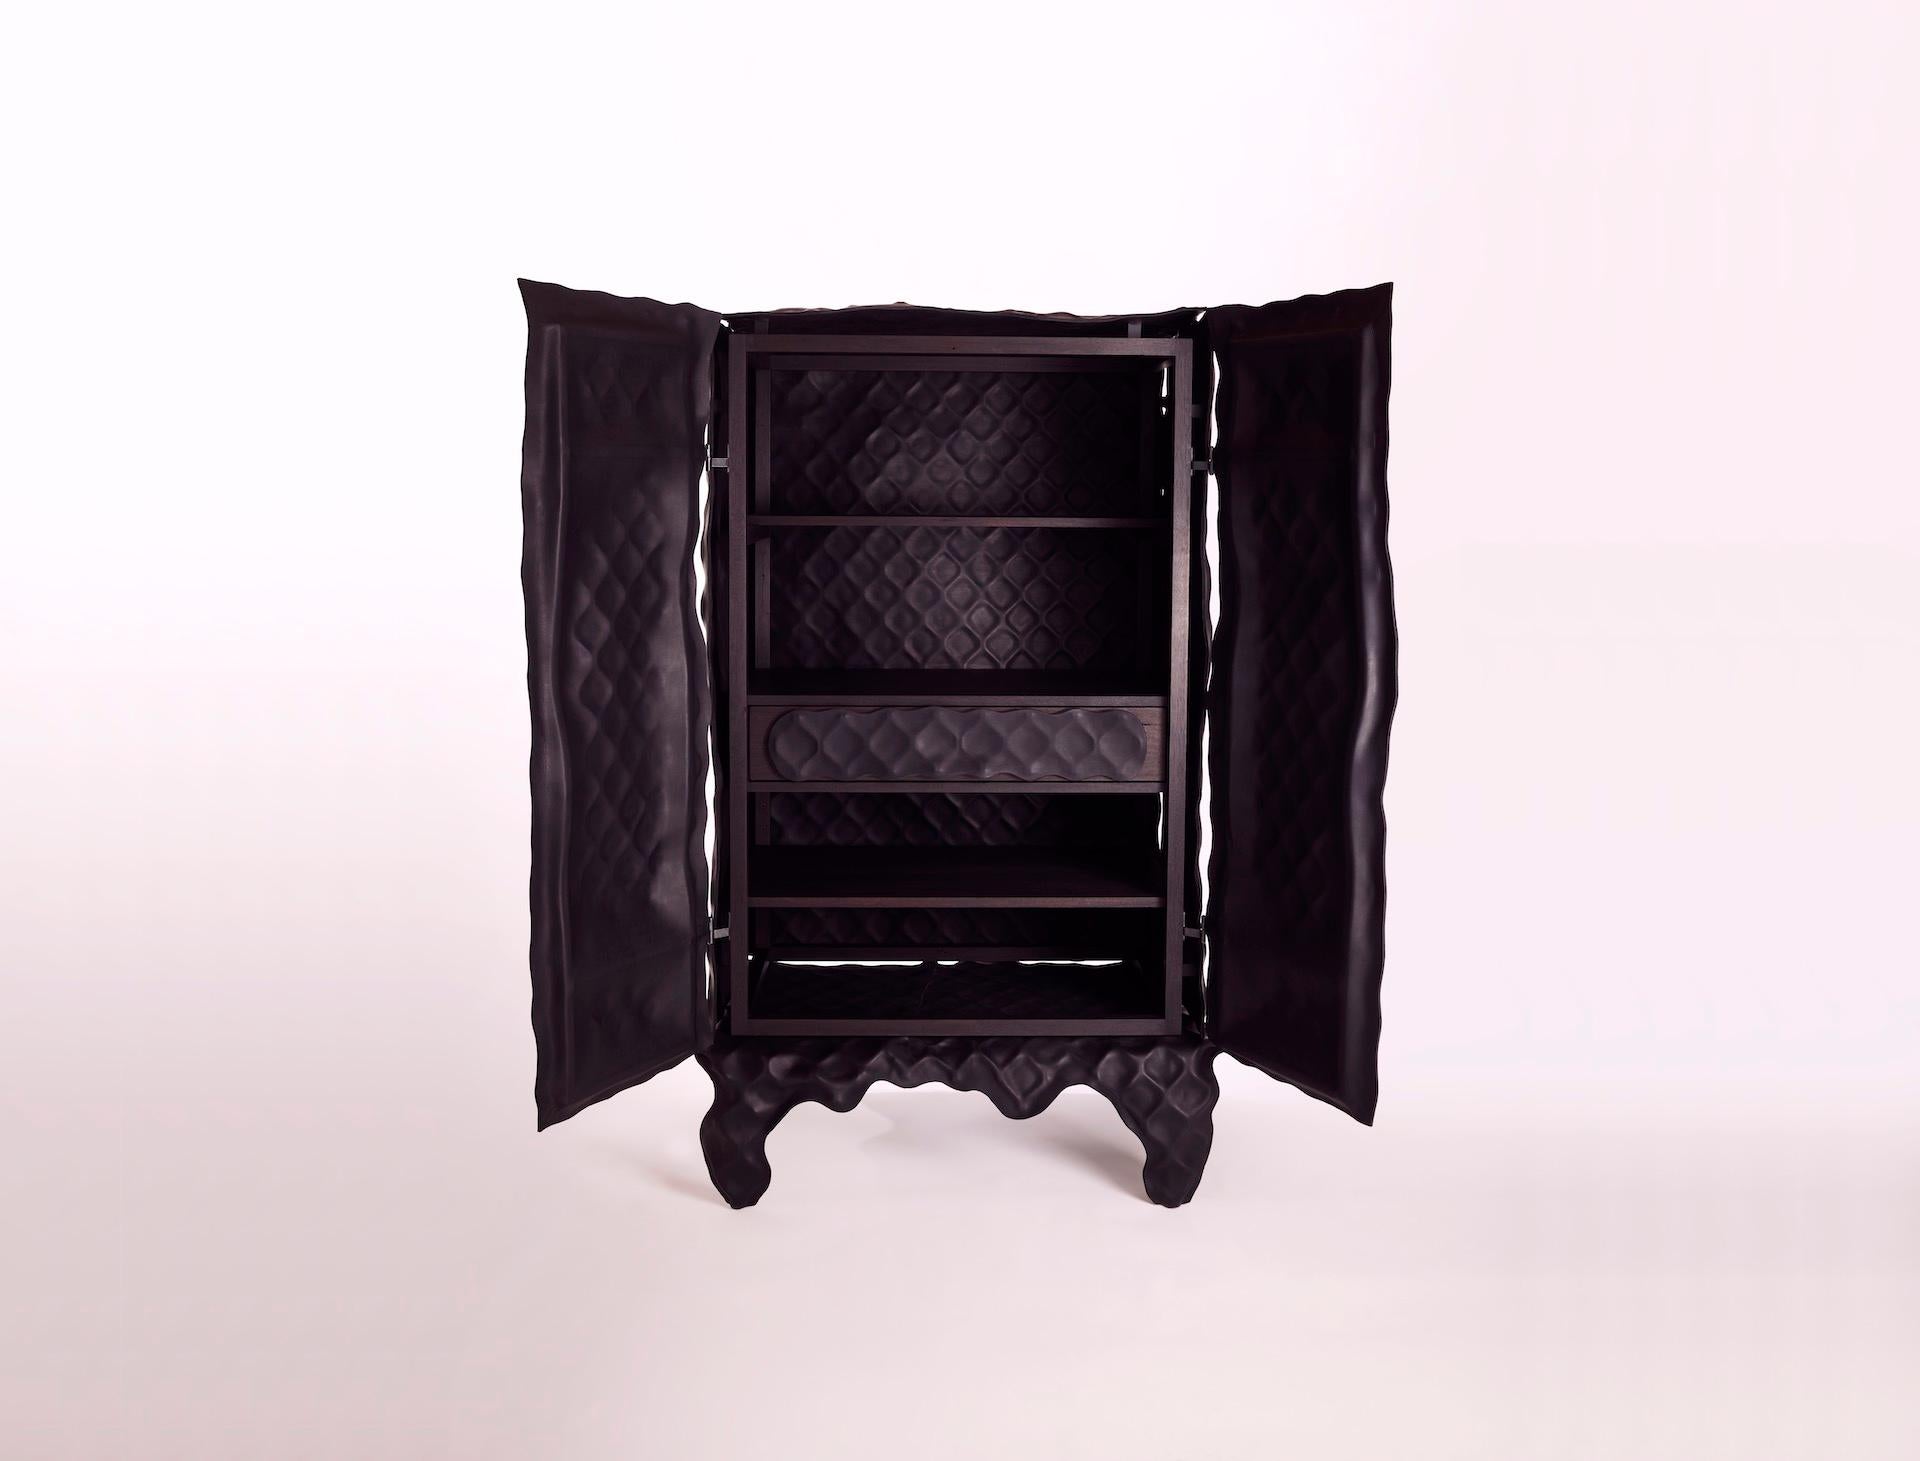 'Partu' New Zealand Leather Cabinet by Trent Jansen & Johnny Nargoodah